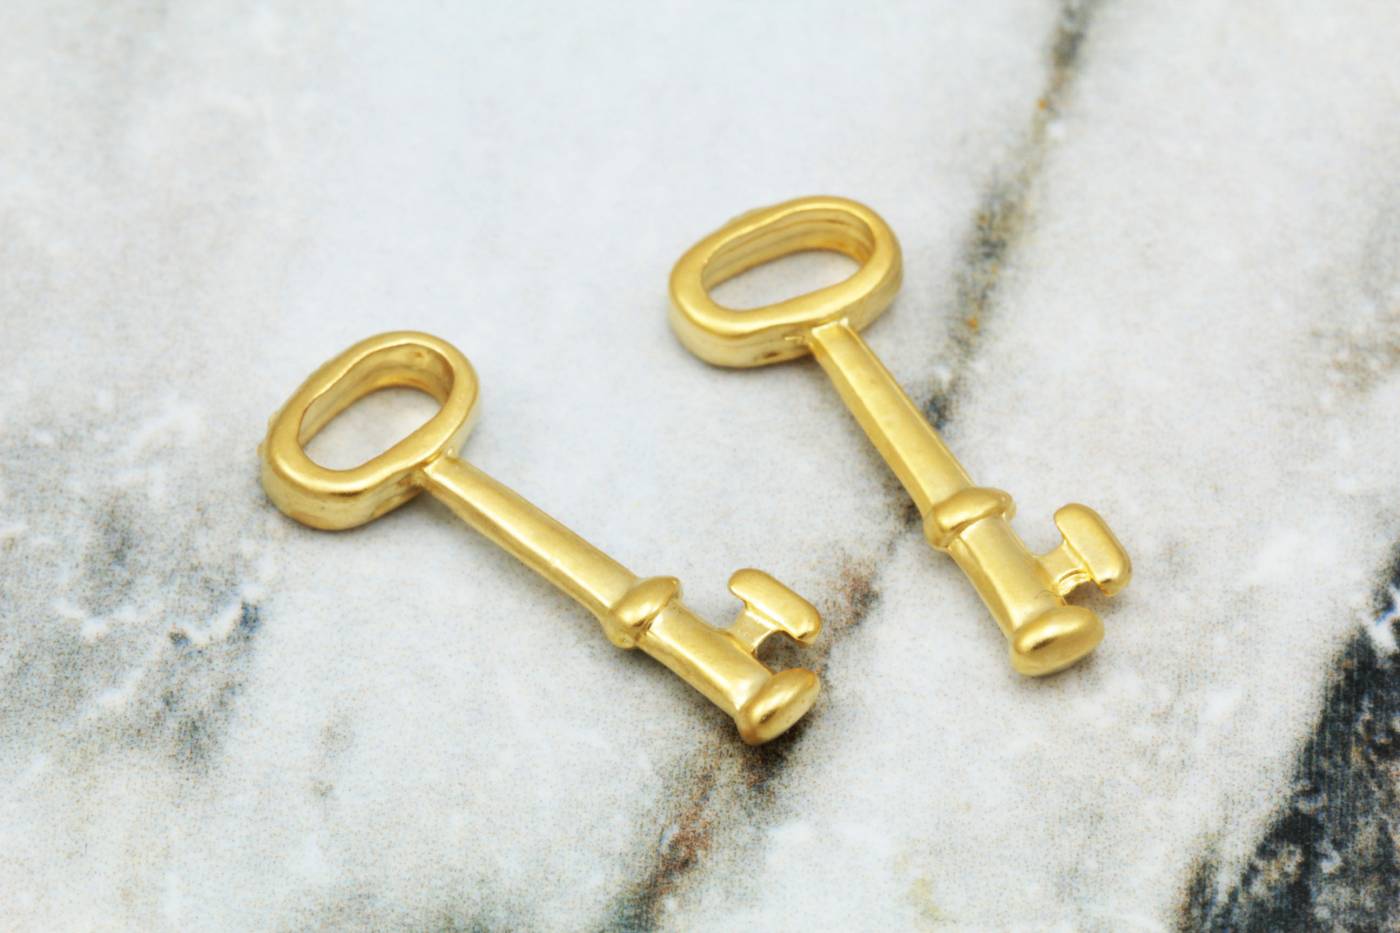 gold-plated-metal-key-jewelry-pendants